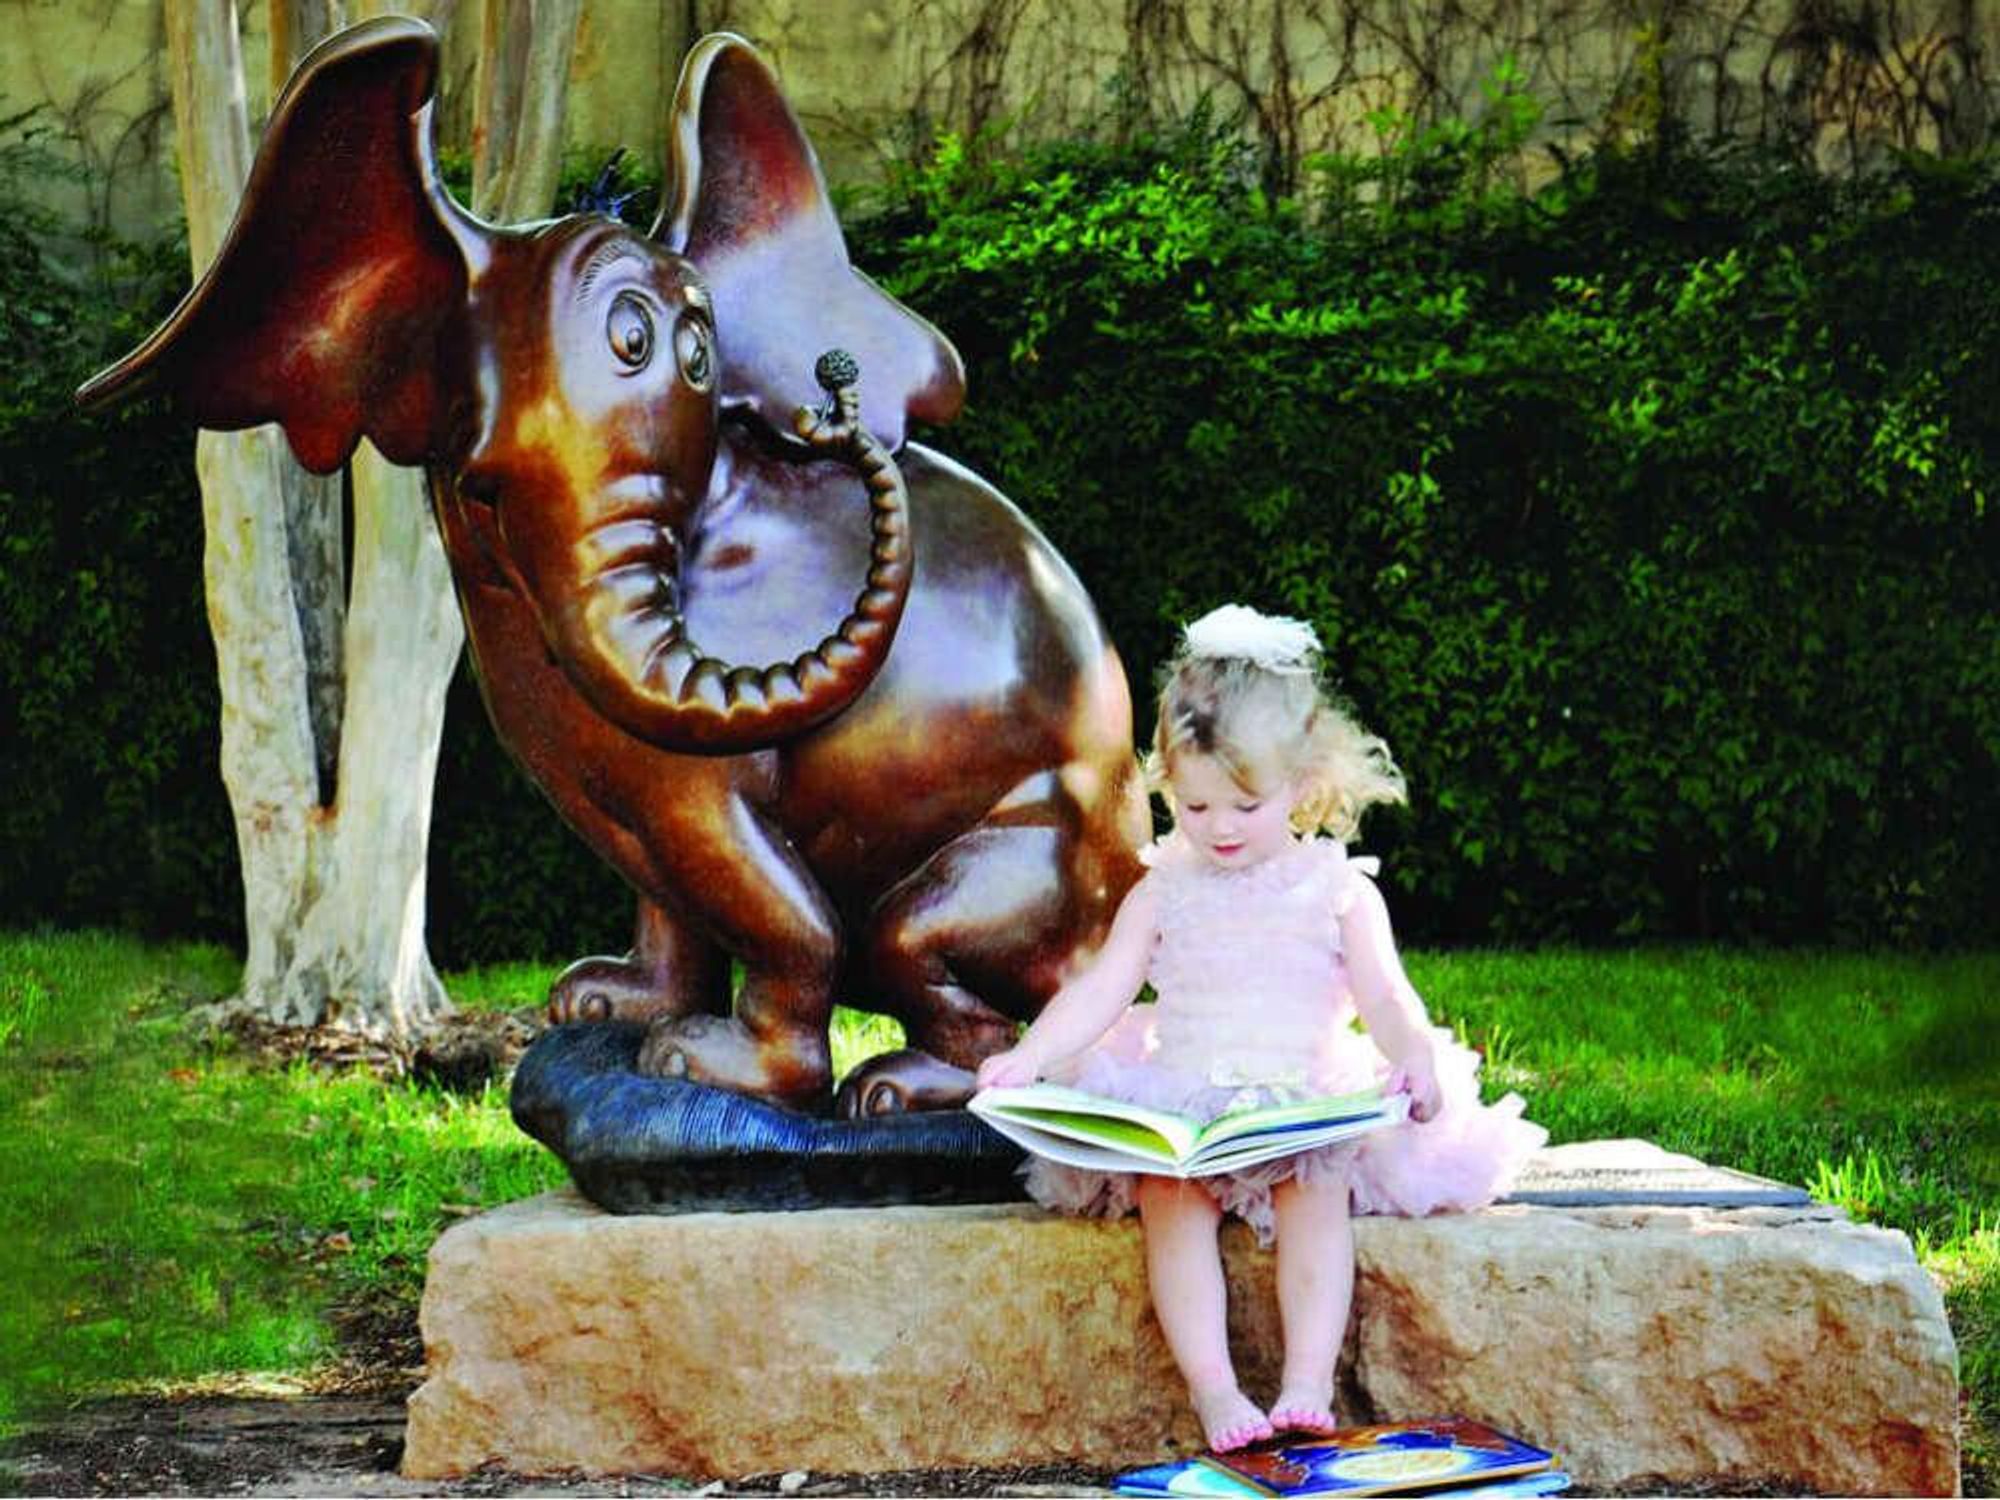 Storybook sculpture in Abilene, Texas